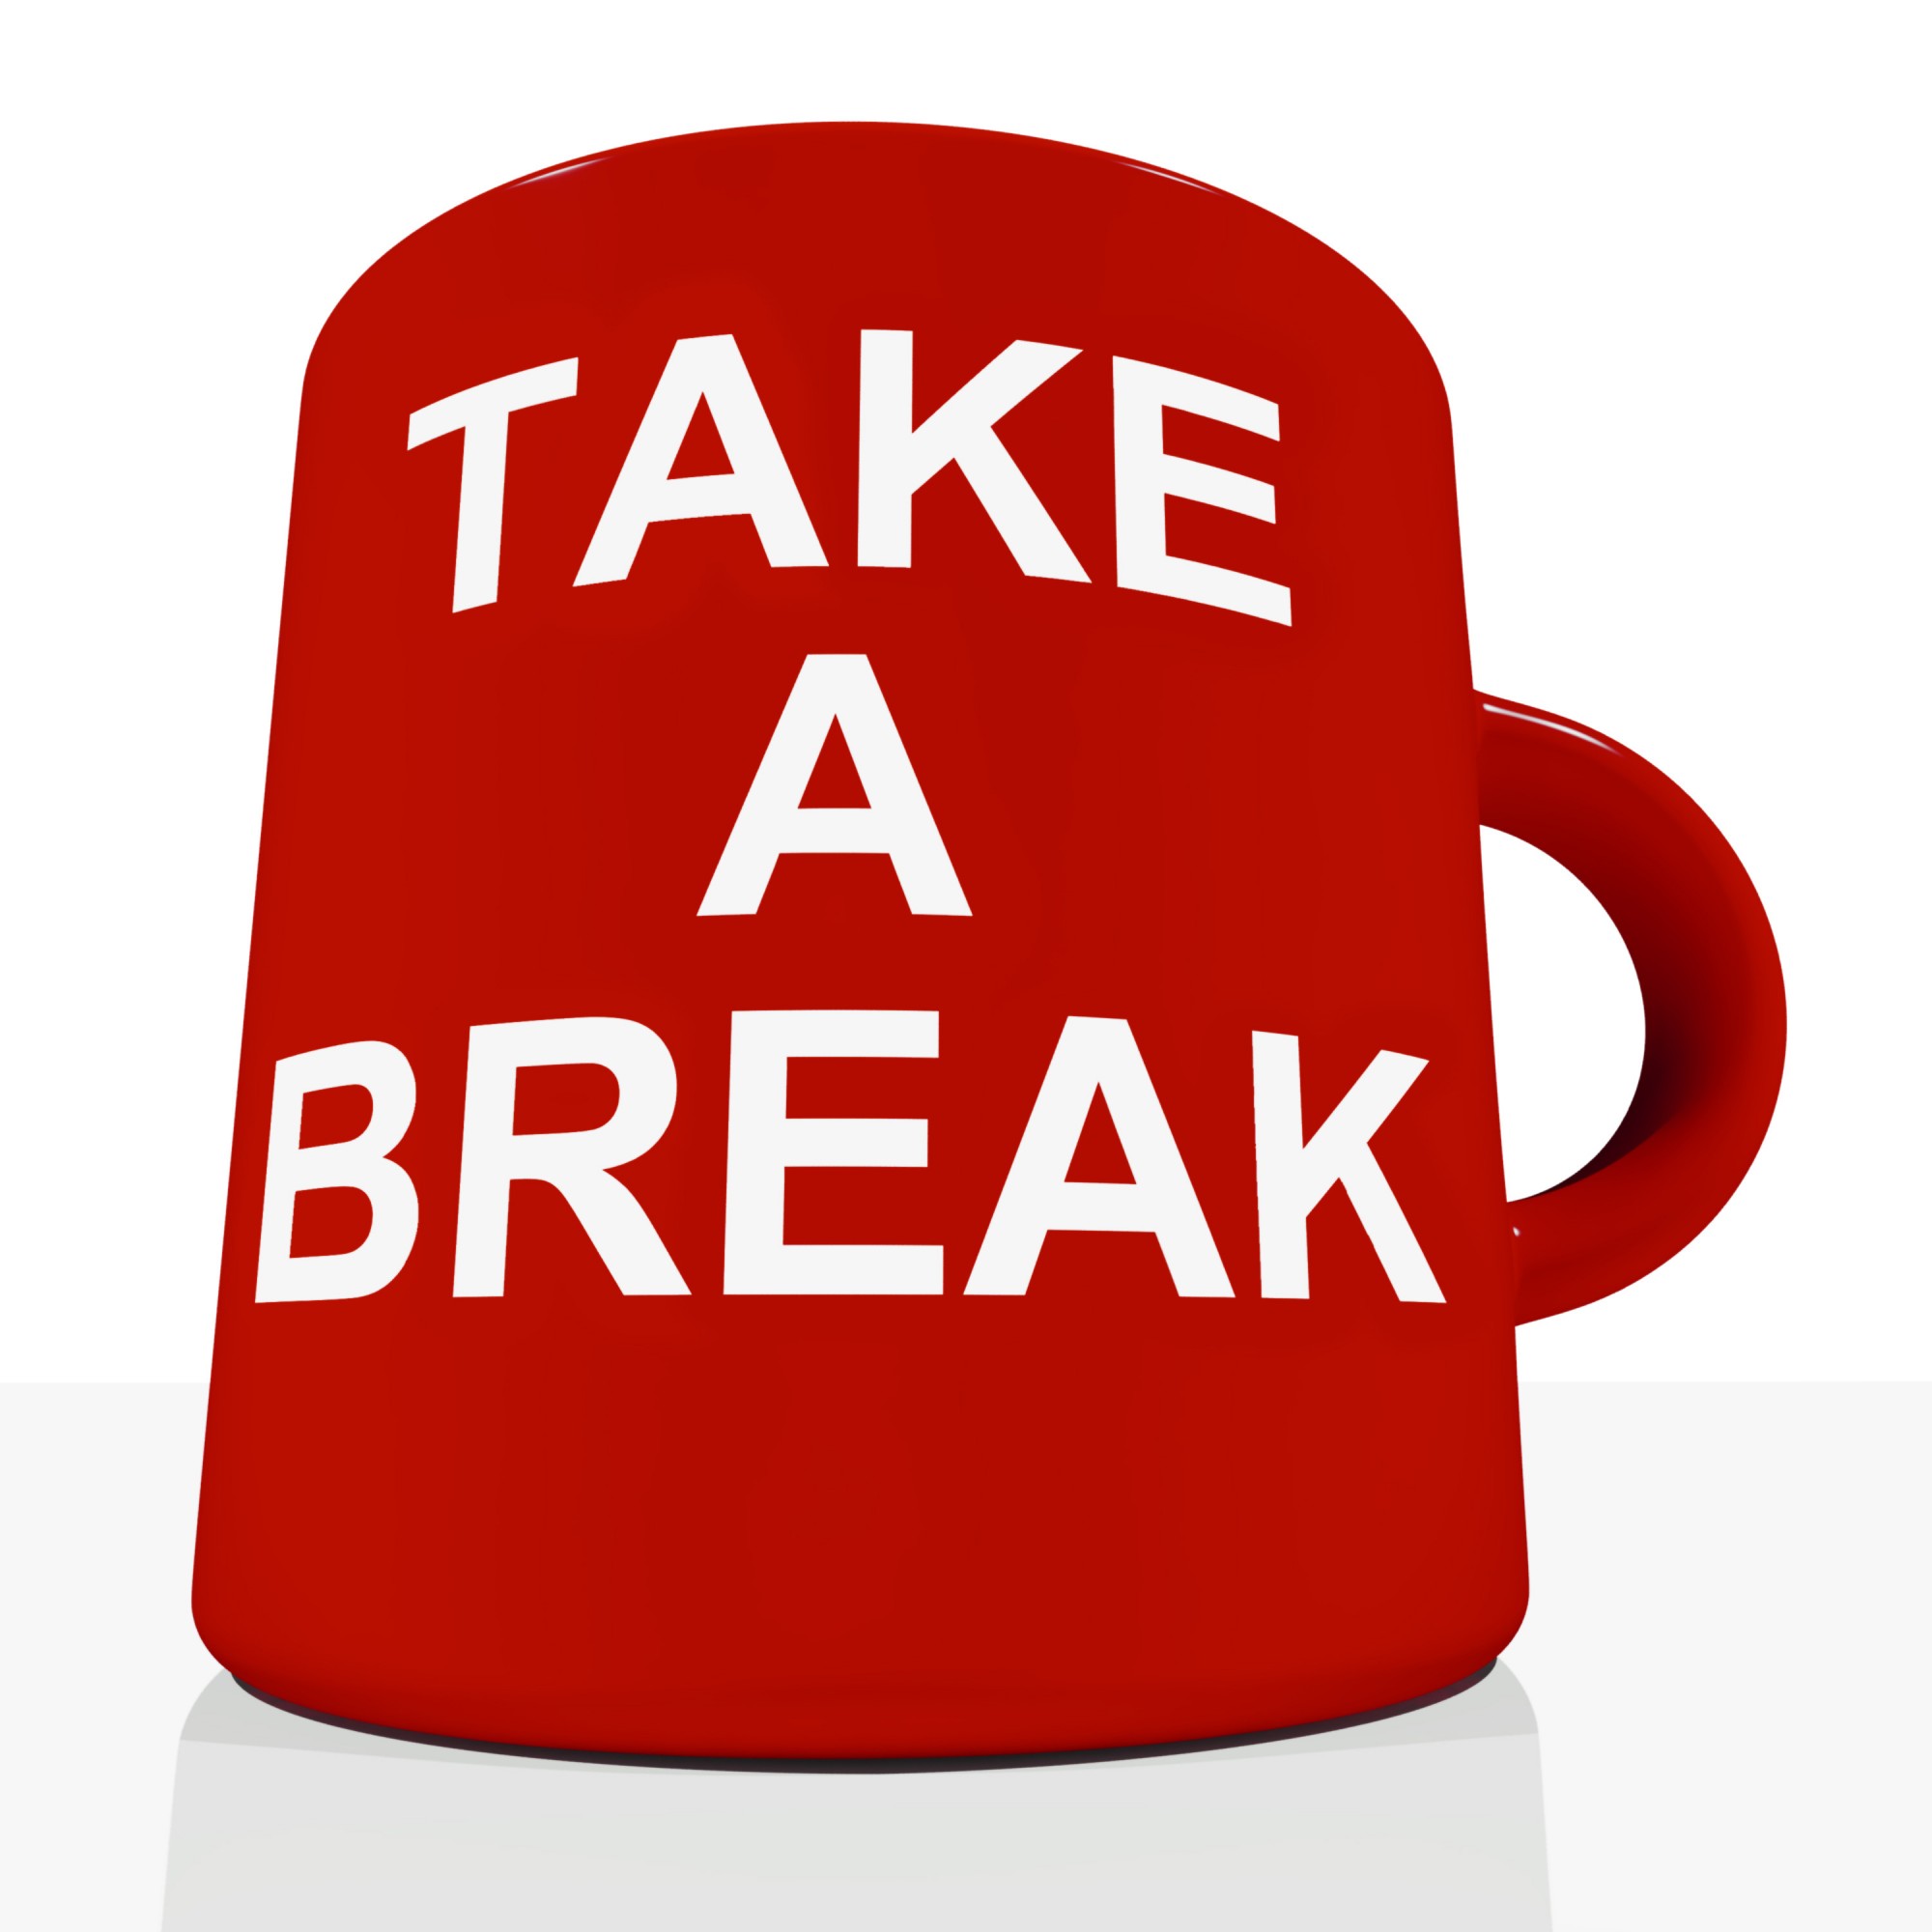 Take A Break Mug Showing Relaxing Or Tiredness.